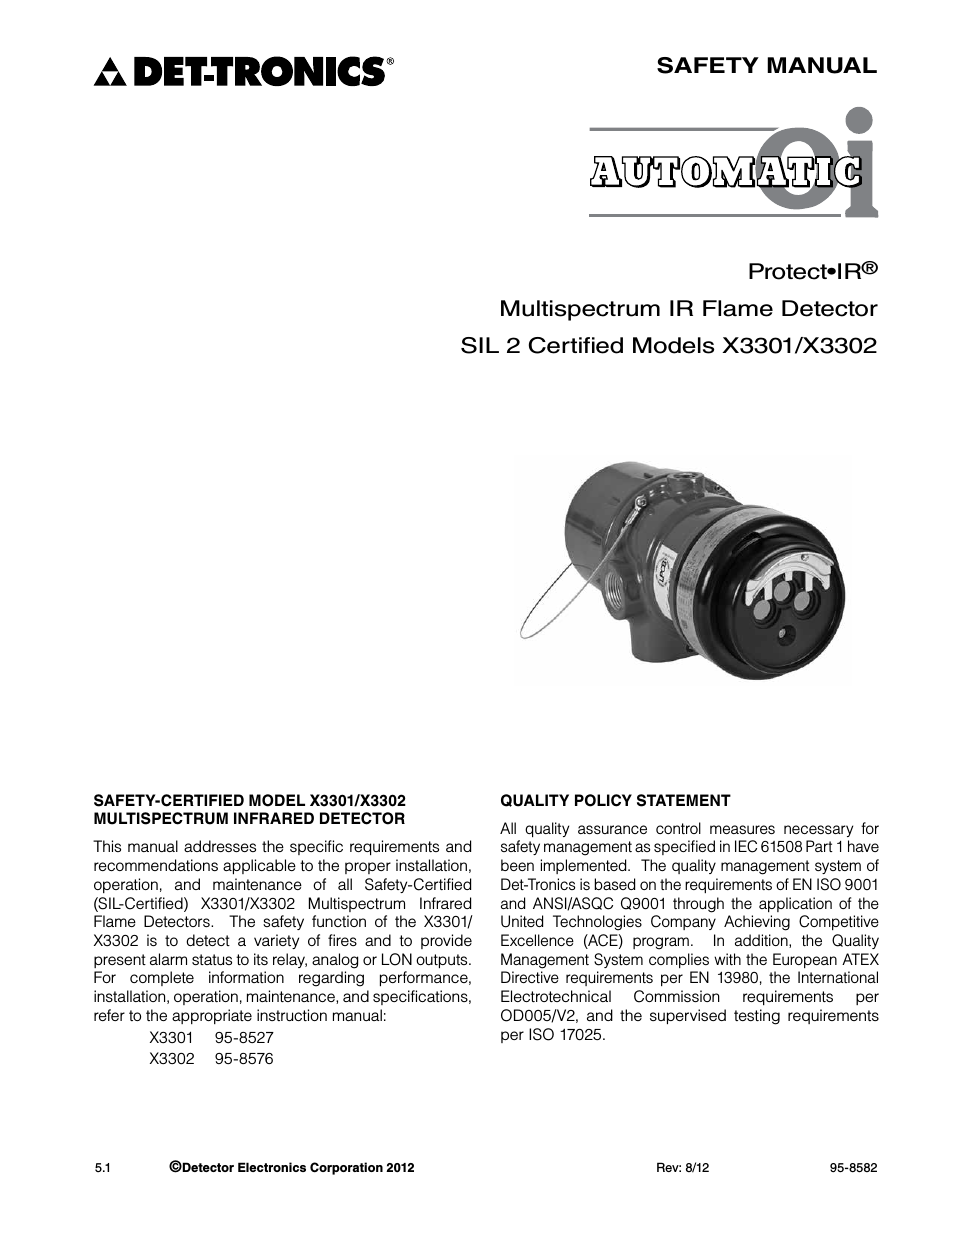 X3302 Multispectrum IR Flame Detector SAFETY MANUAL